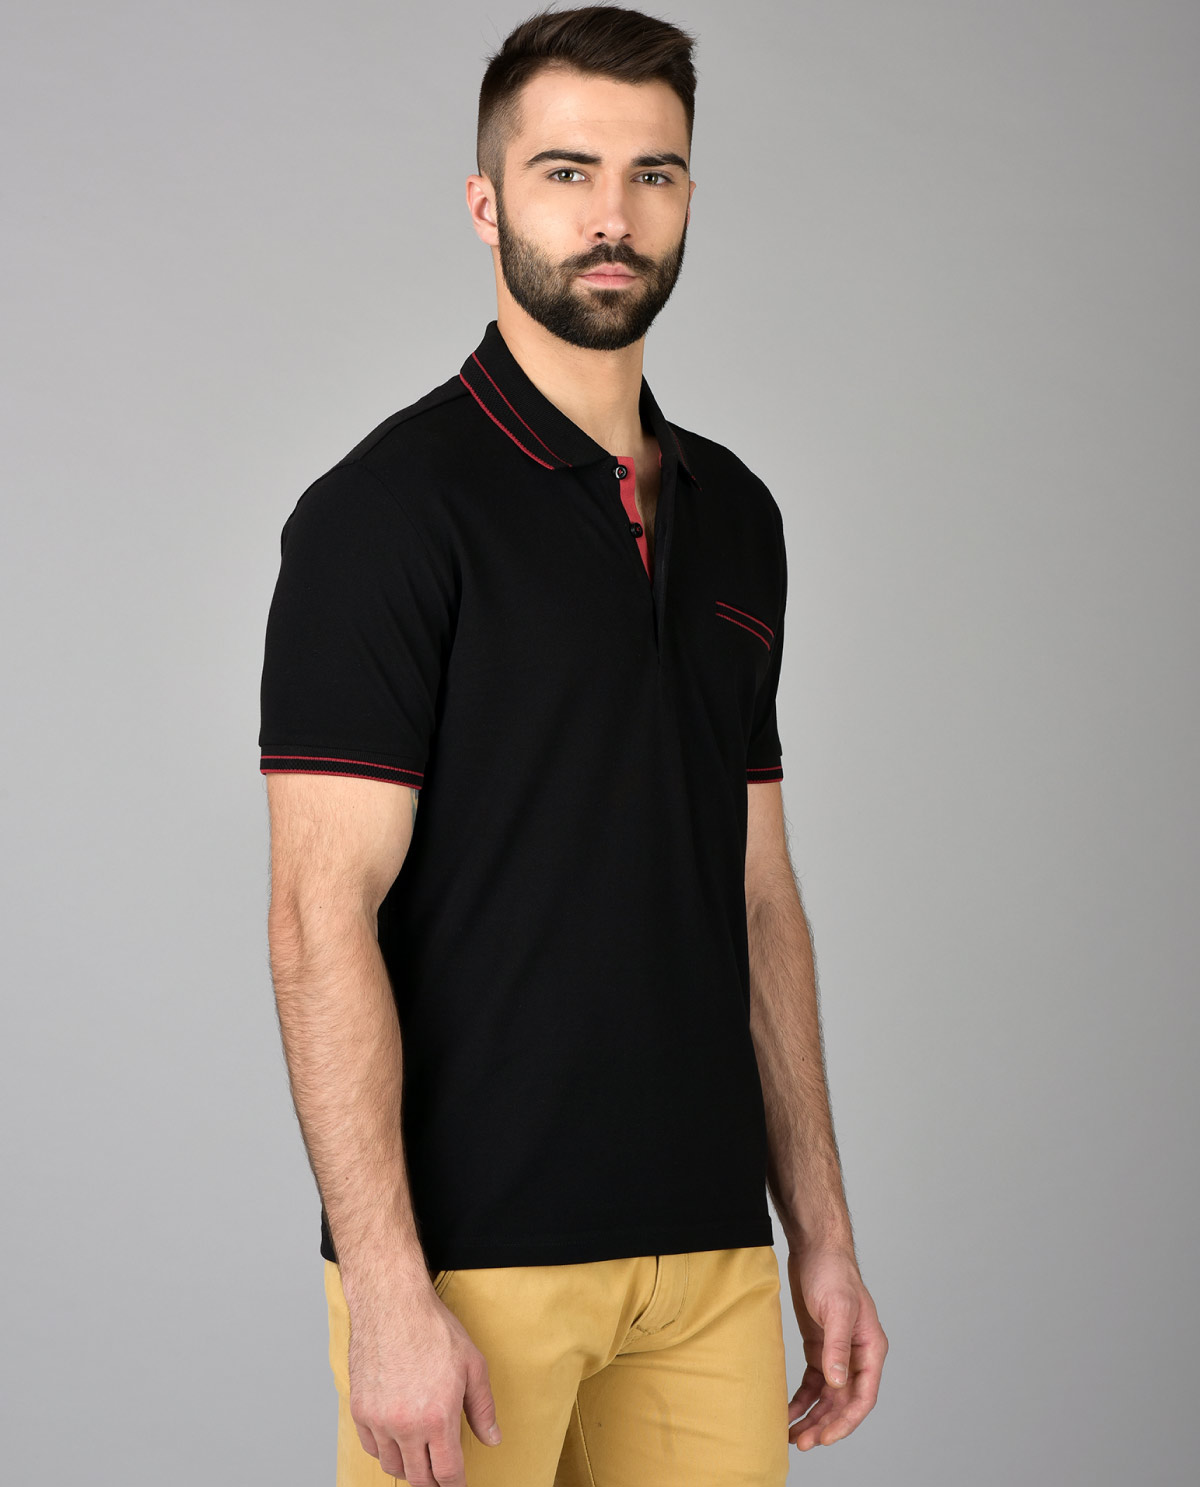 Black-Polo-for-Men-with-Red-Trim-3 - Kashvi Designs